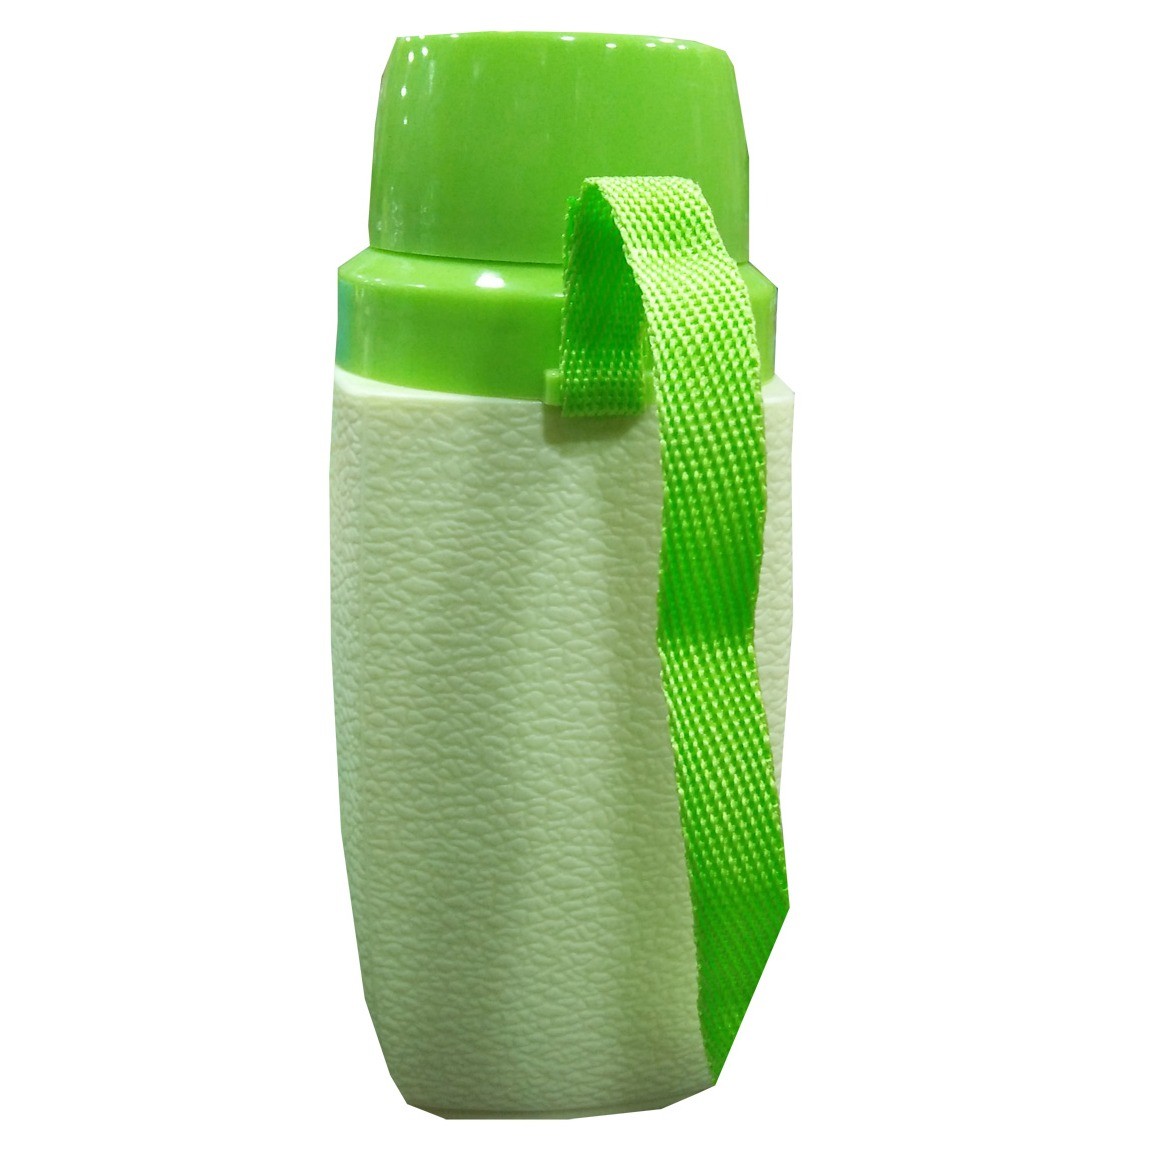 Oreo Water bottle for Kids - Green - Unbreakable